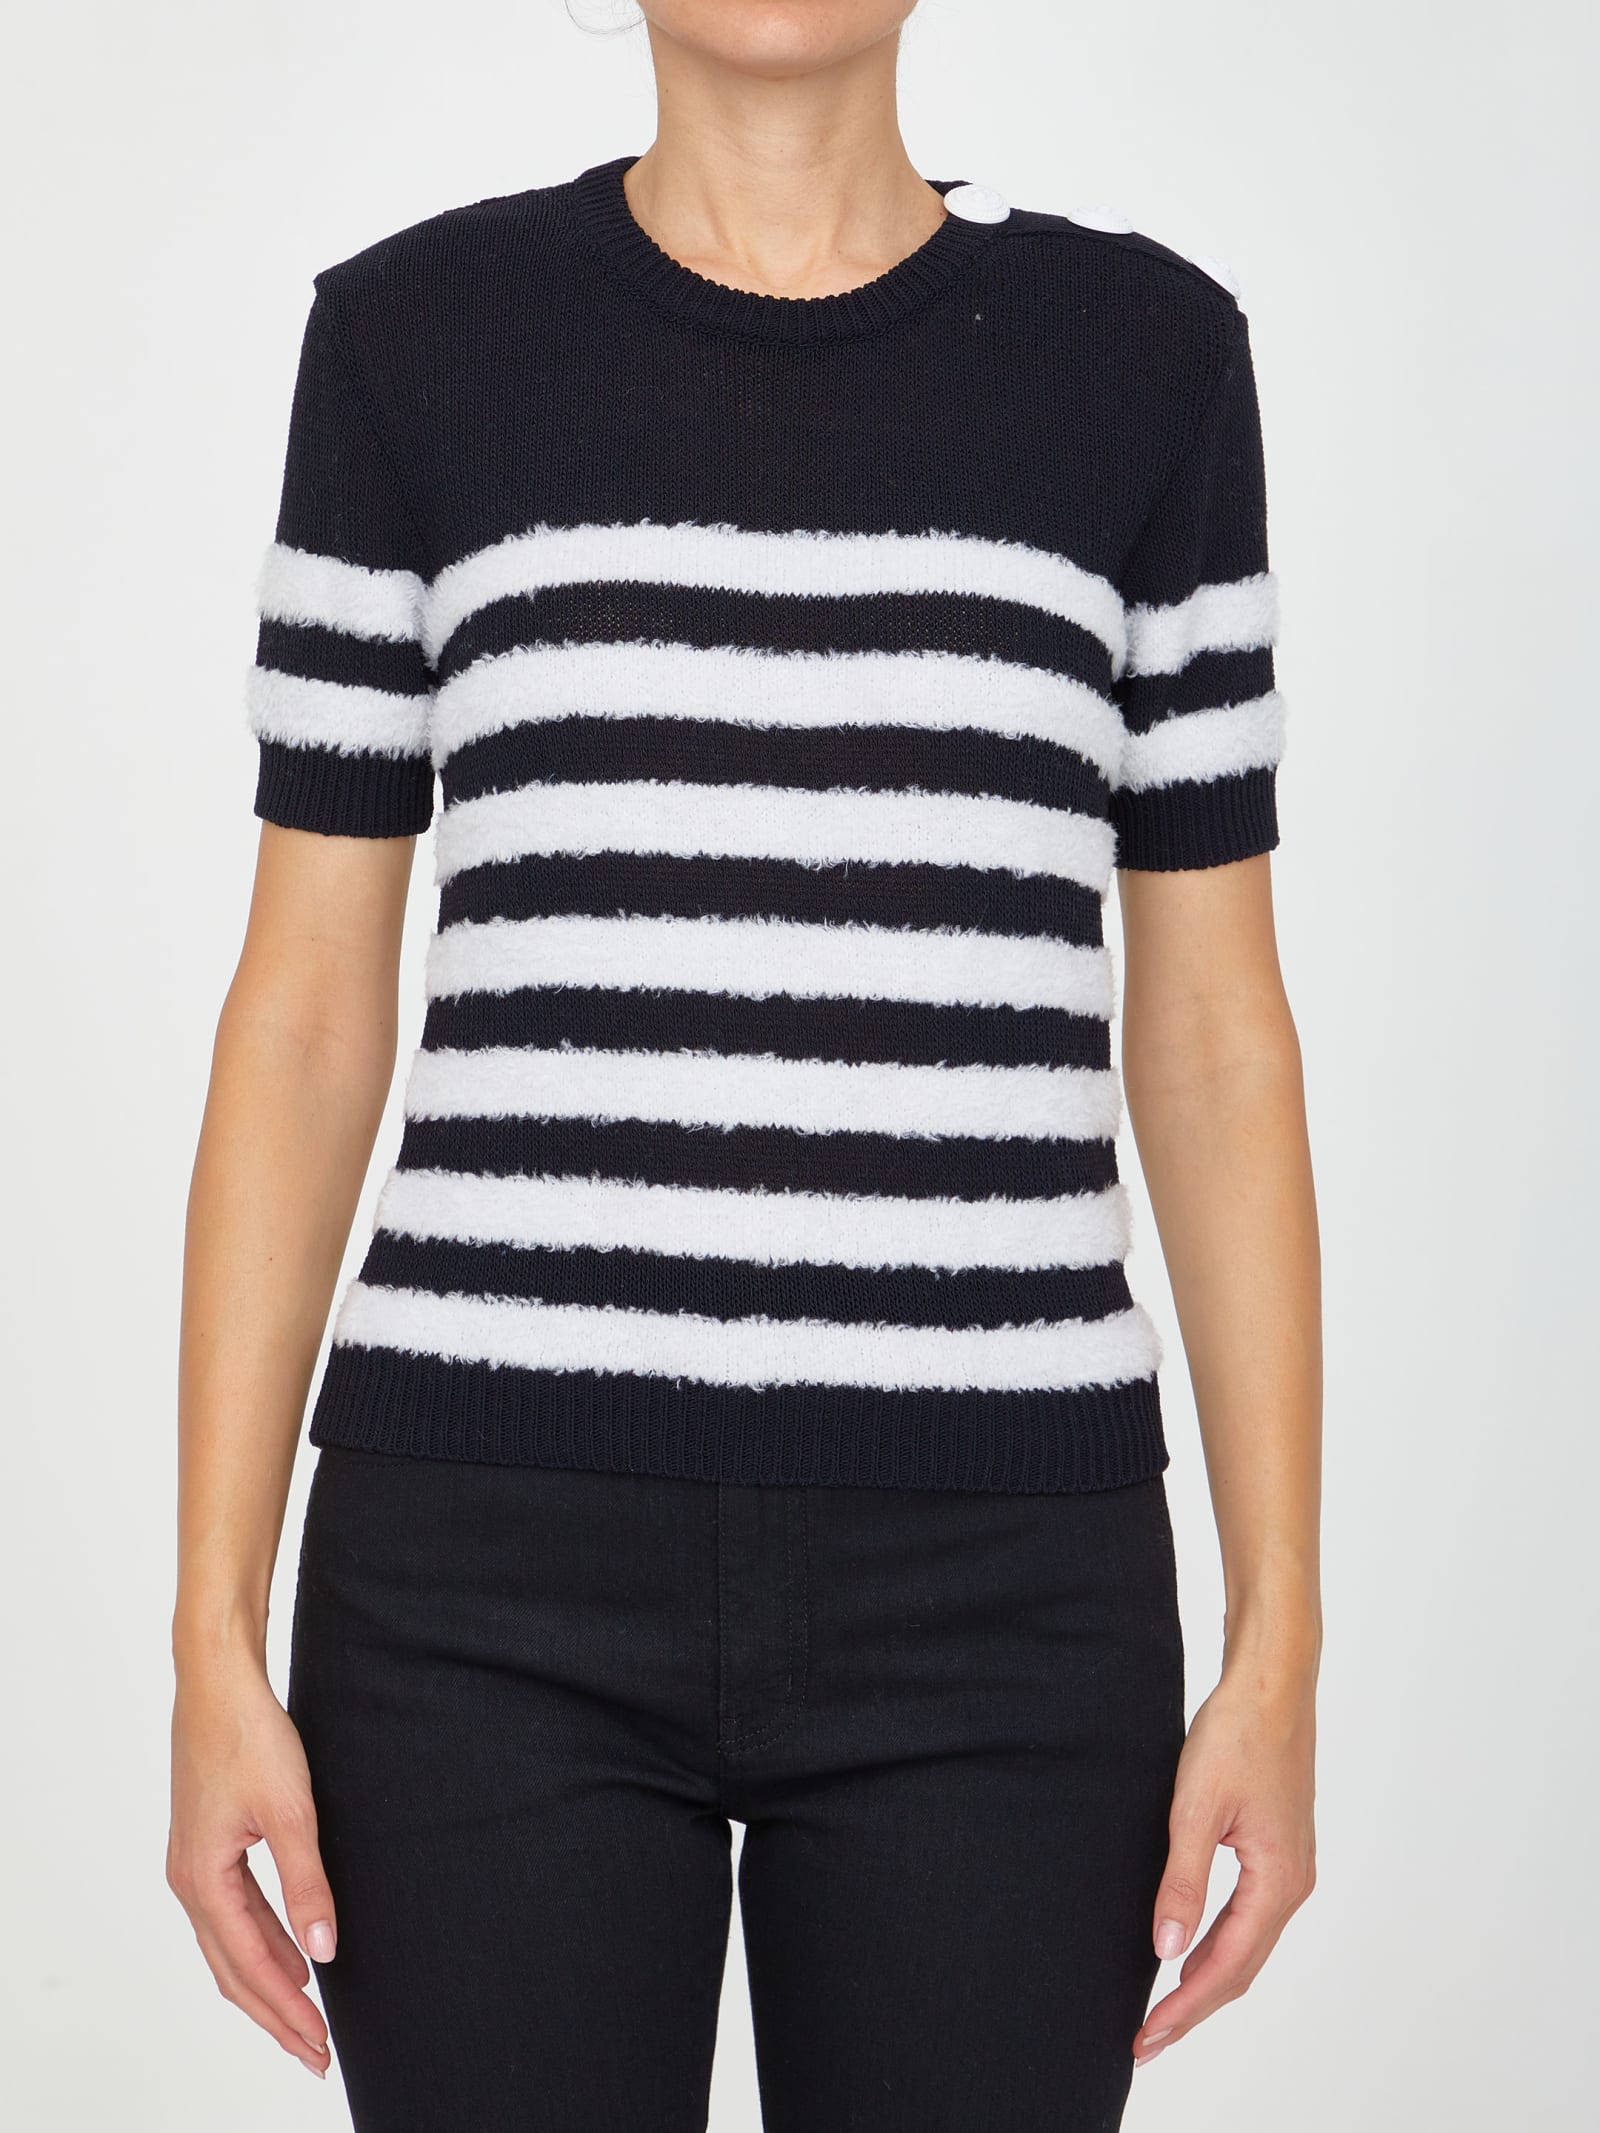 Balmain Striped Knit T-shirt